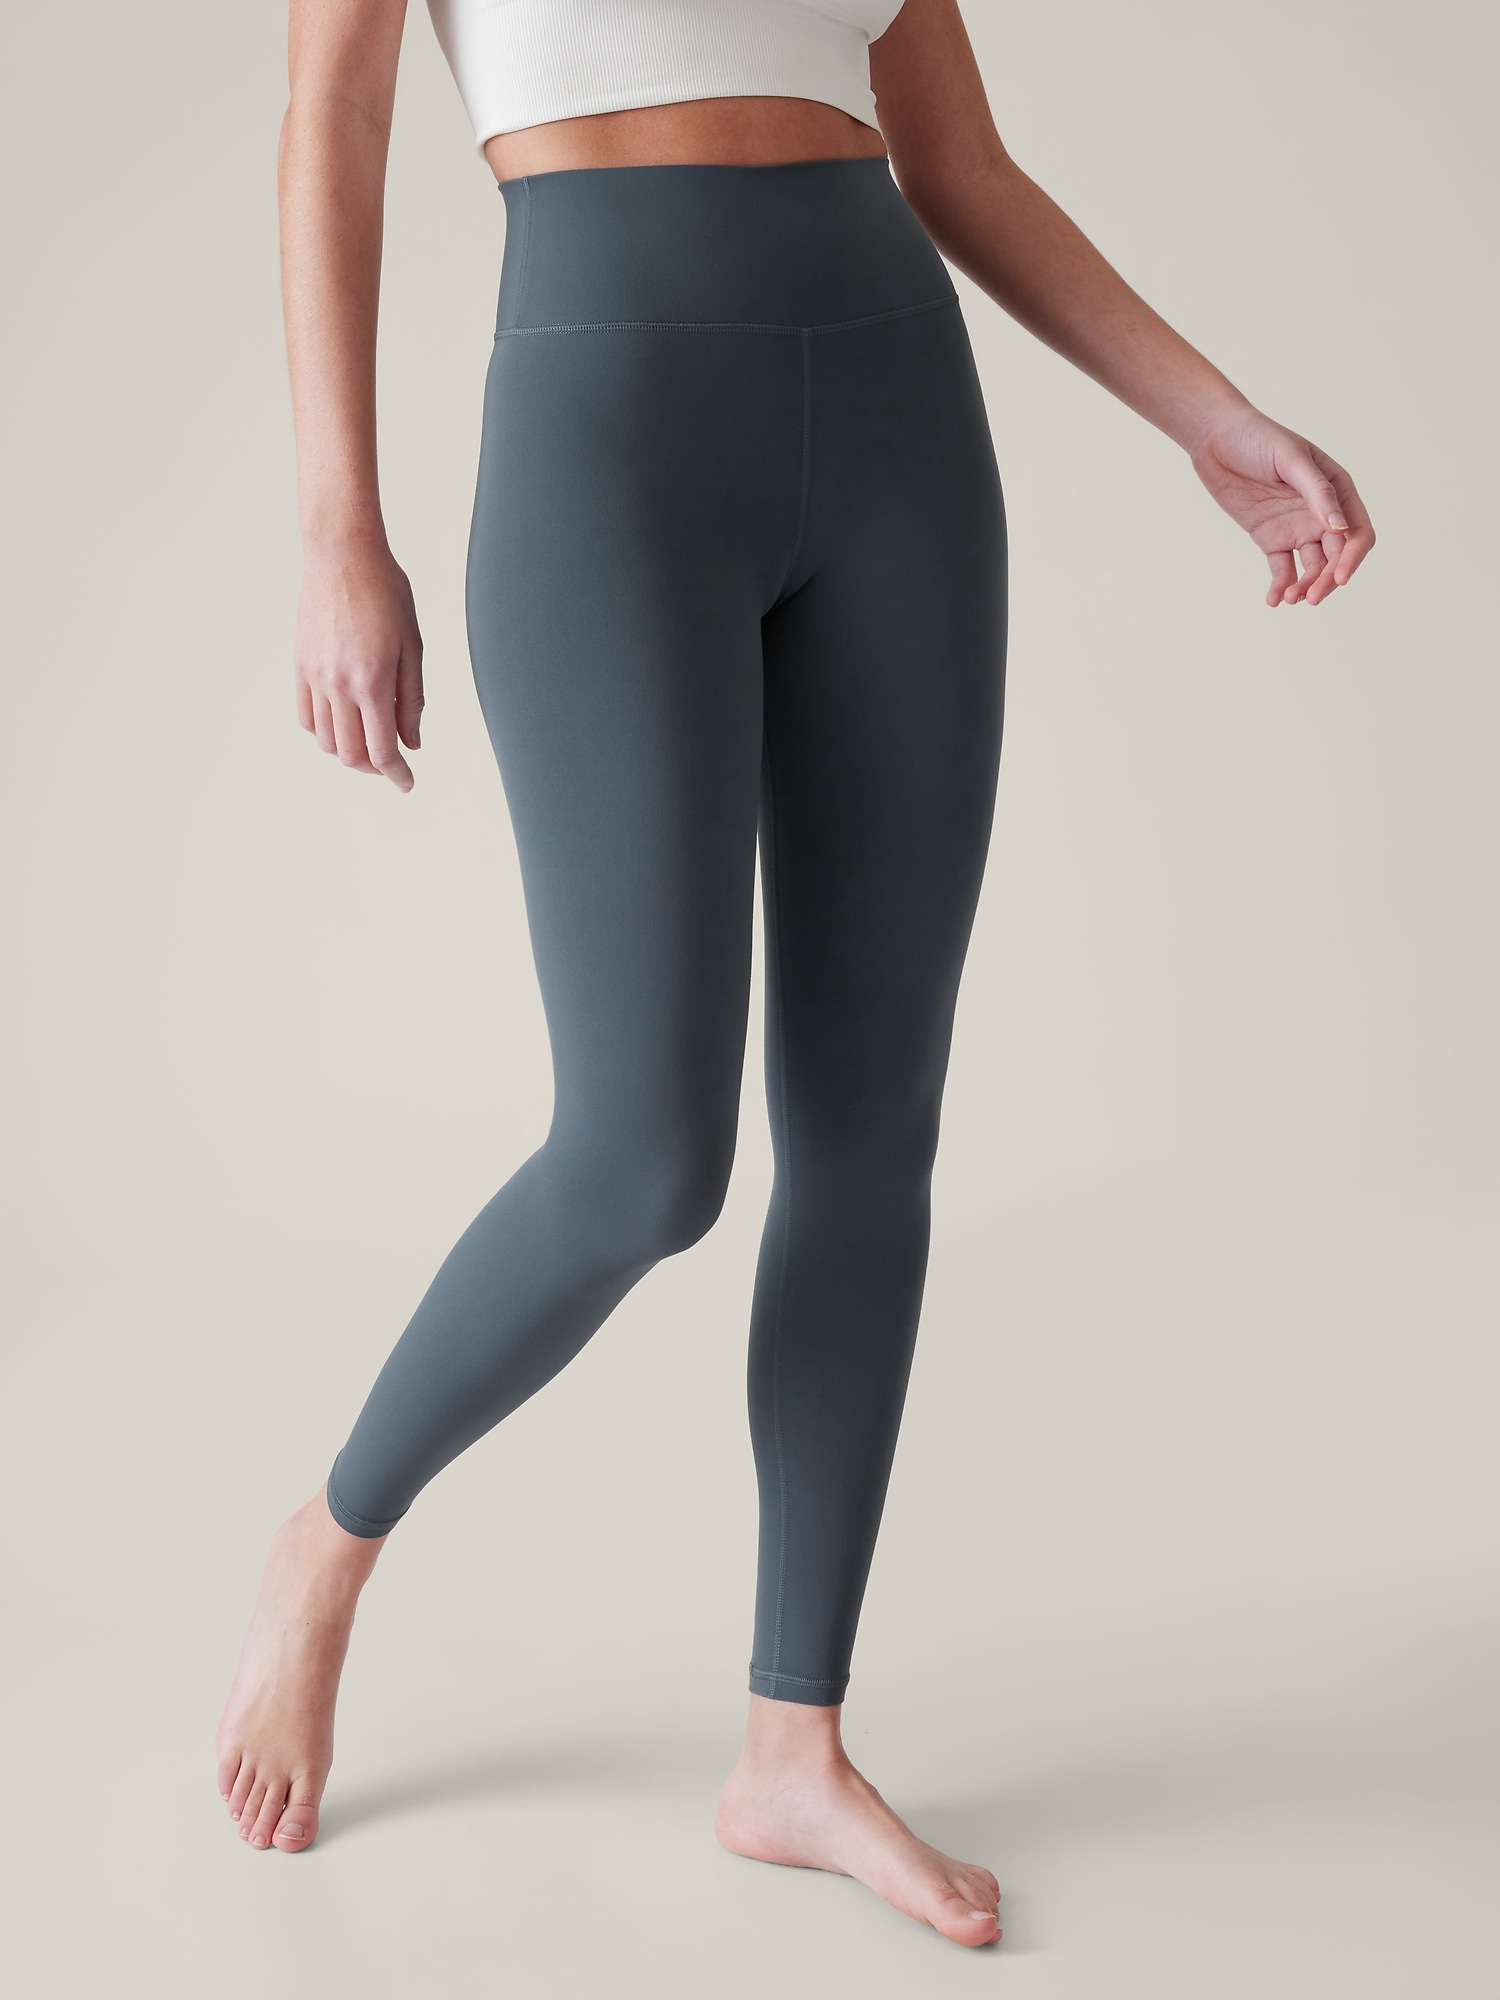 Cathalem Yoga Pants for Women Petite Length Exercise Yoga Waist Bubble  Running Yoga Pants for Women Tall Length Mesh Lift Pants Blue X-Large